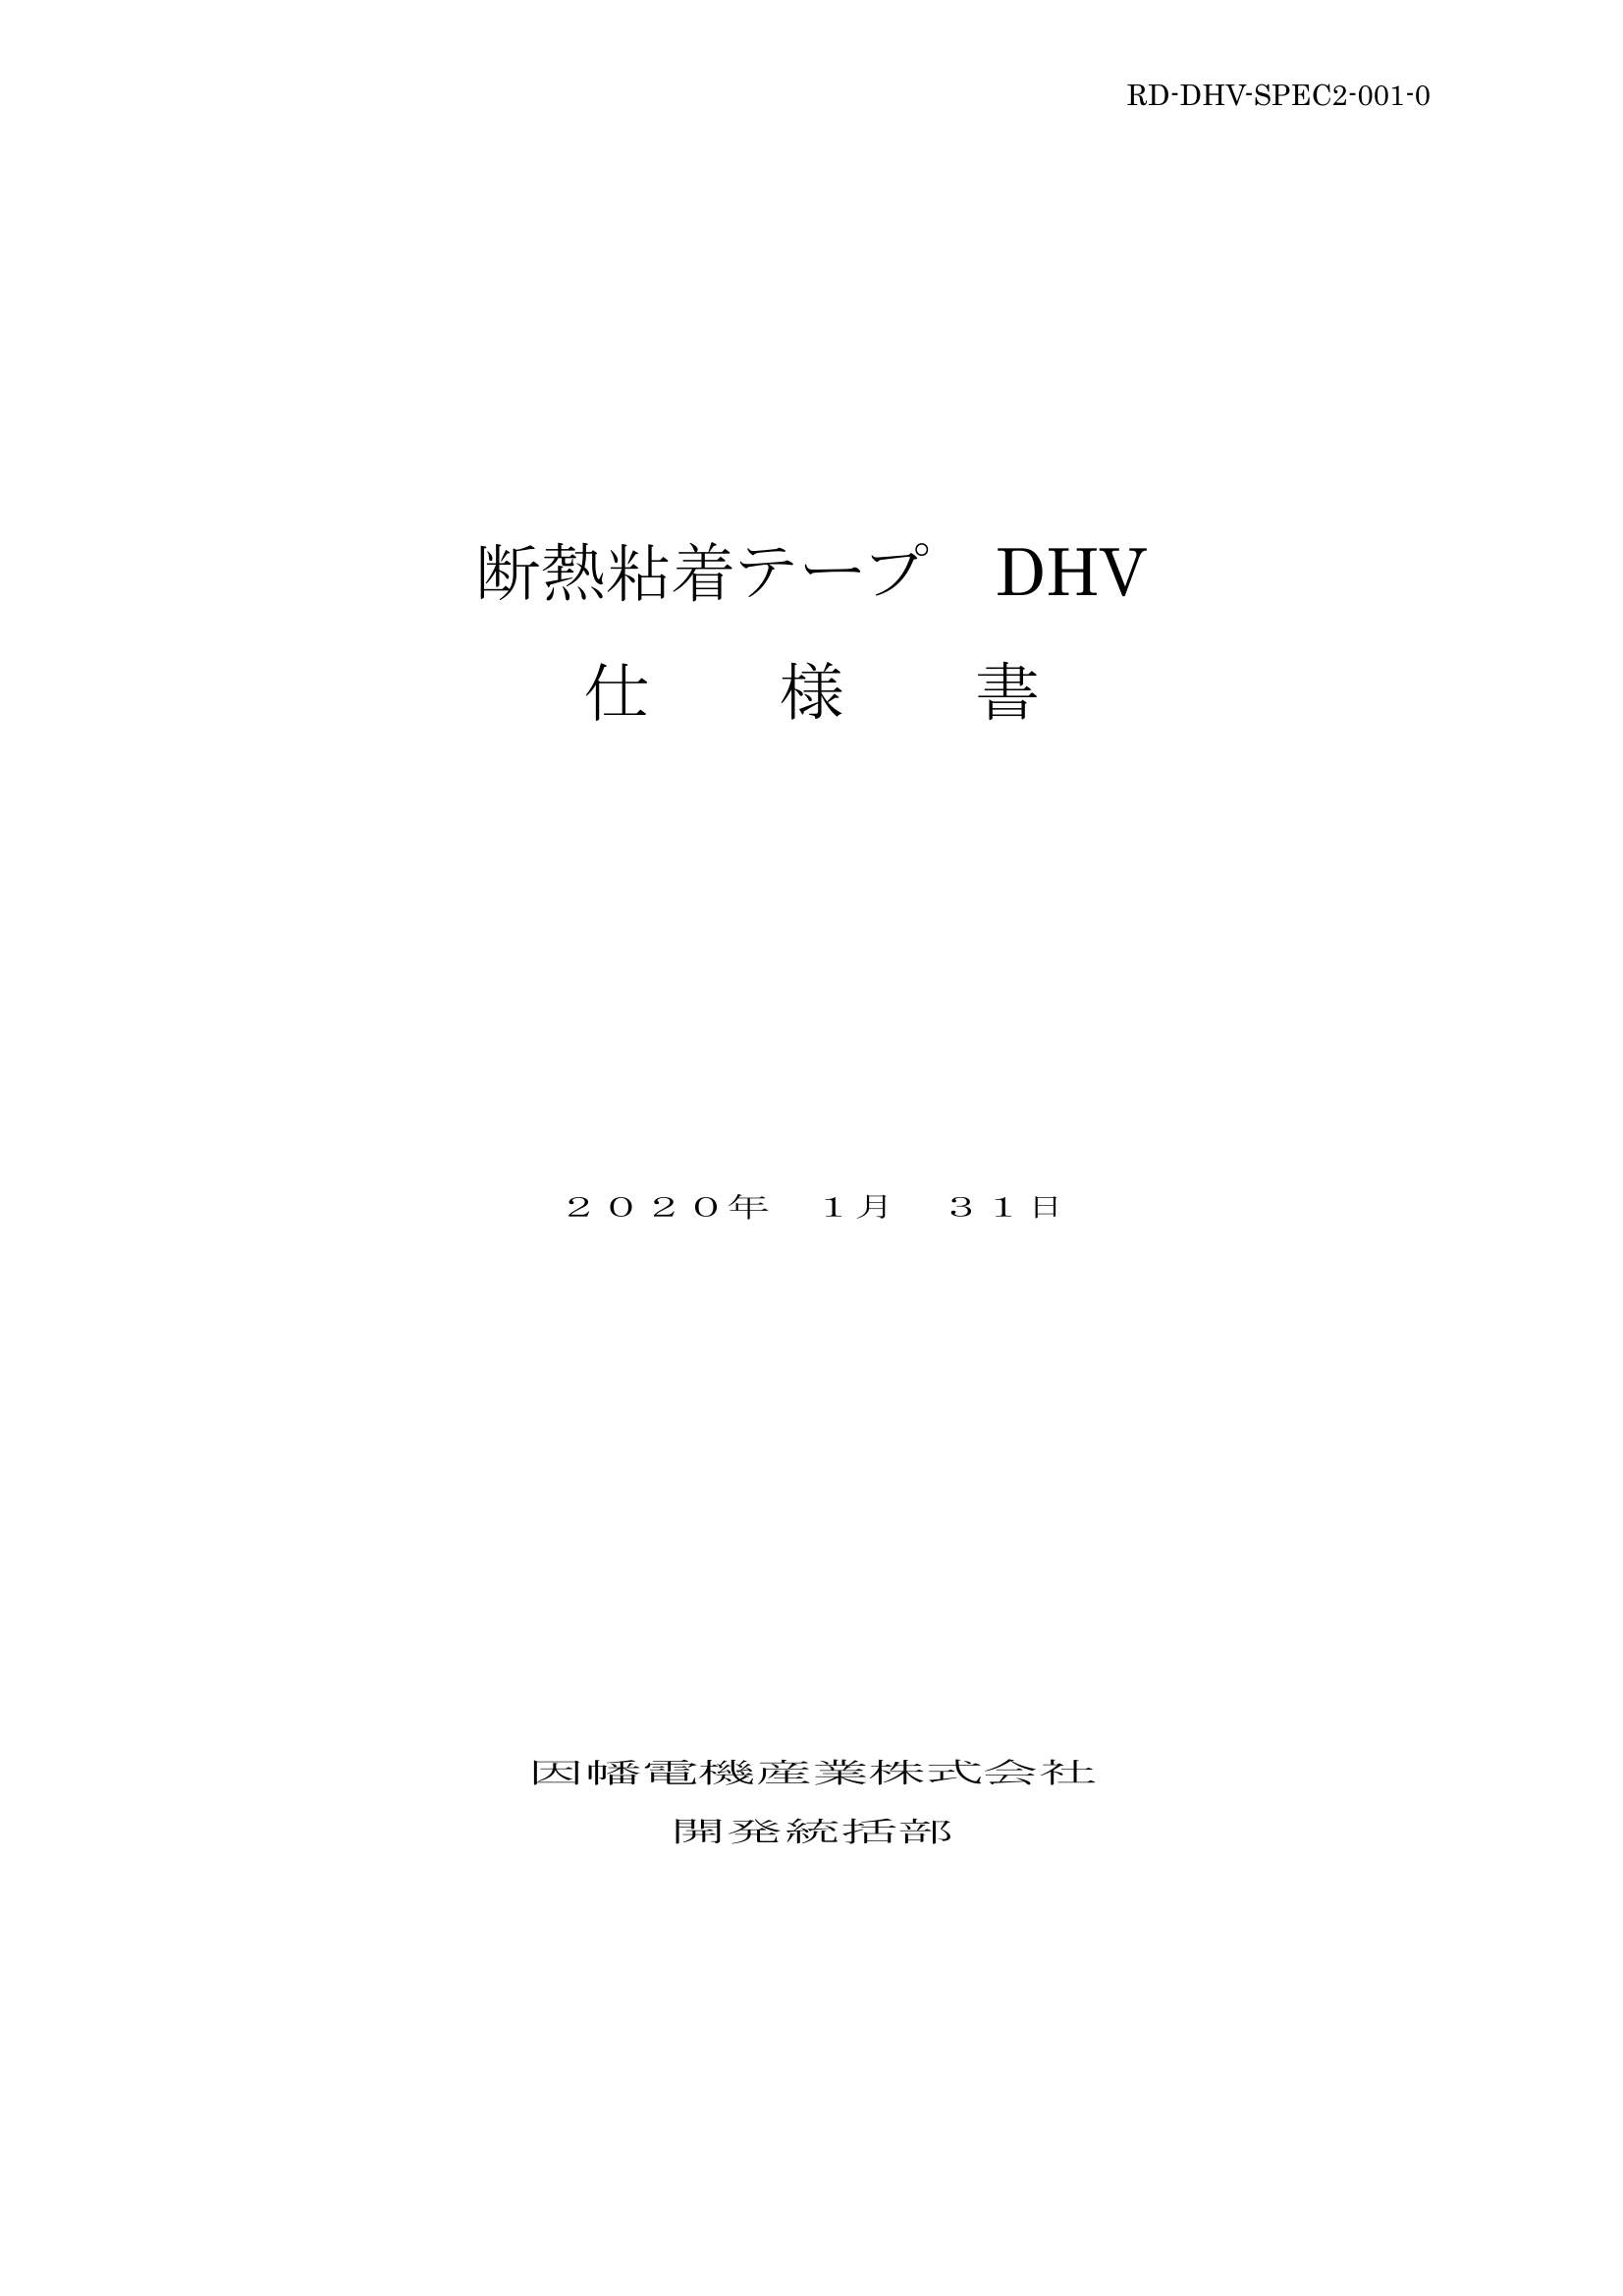 DHV_仕様書_20200131.pdf